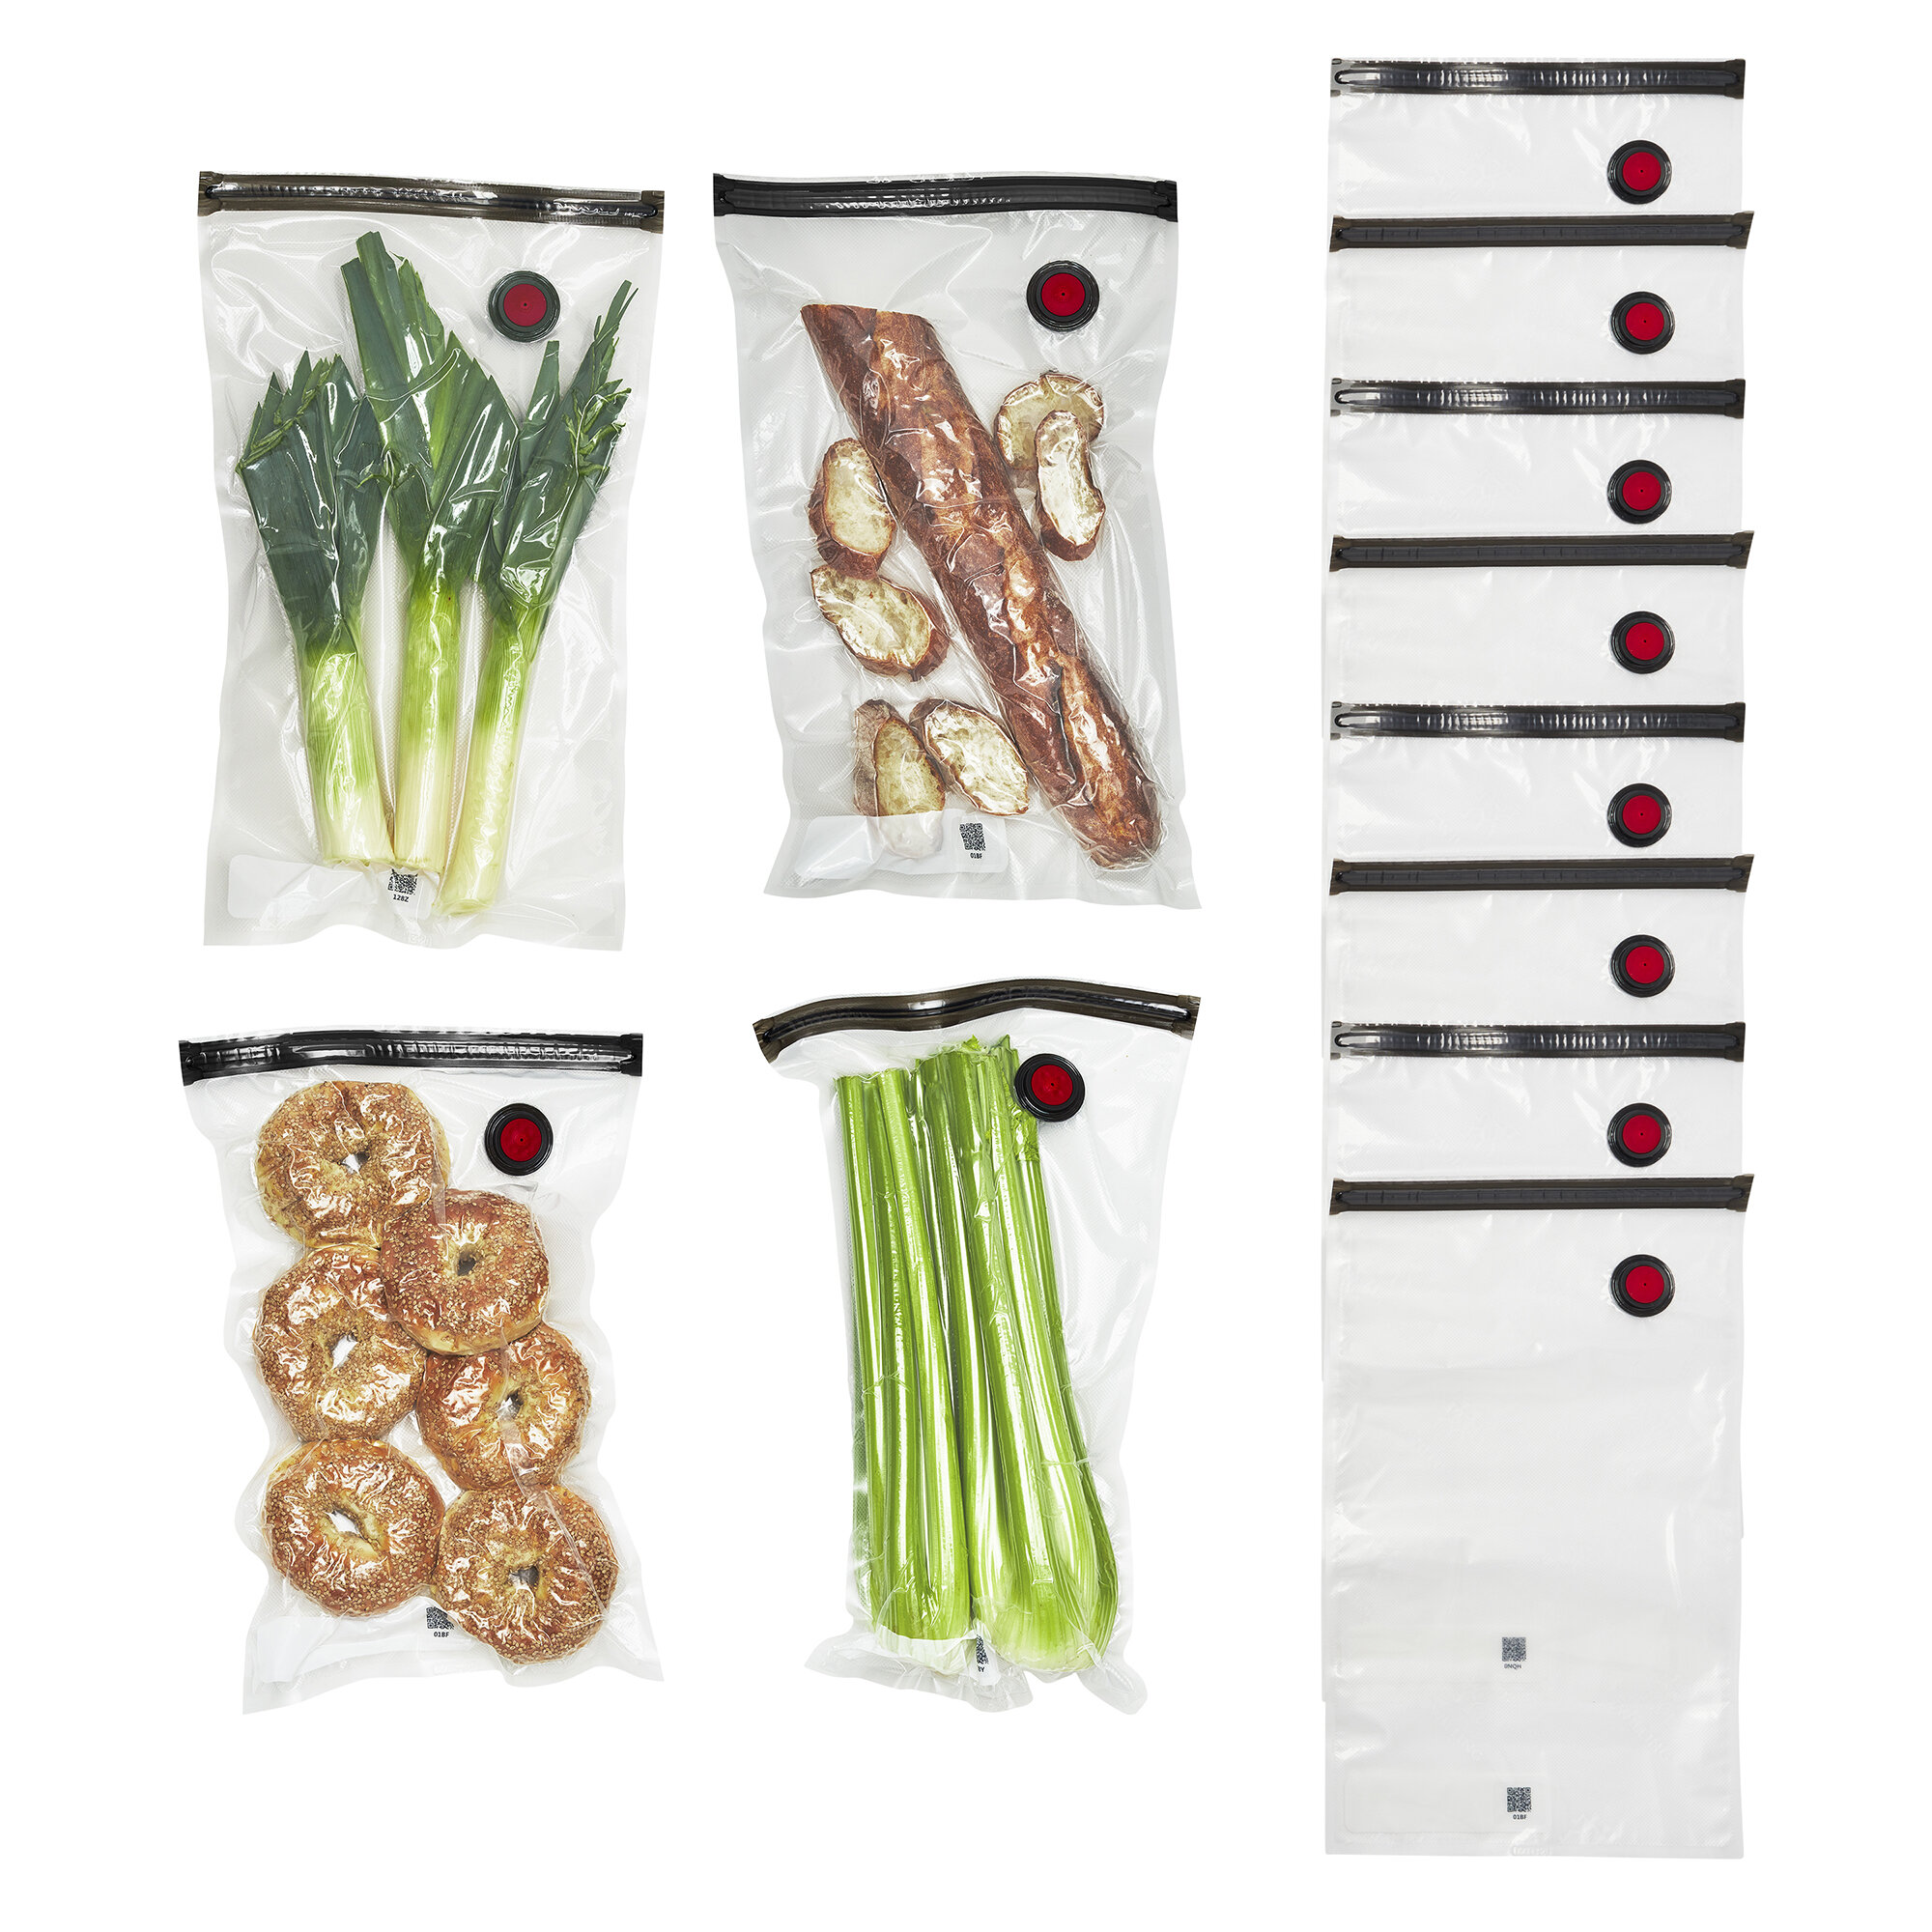 Sous Vide Bags, 42 PCS Electric Vacuum Food Sealer & Reusable Food